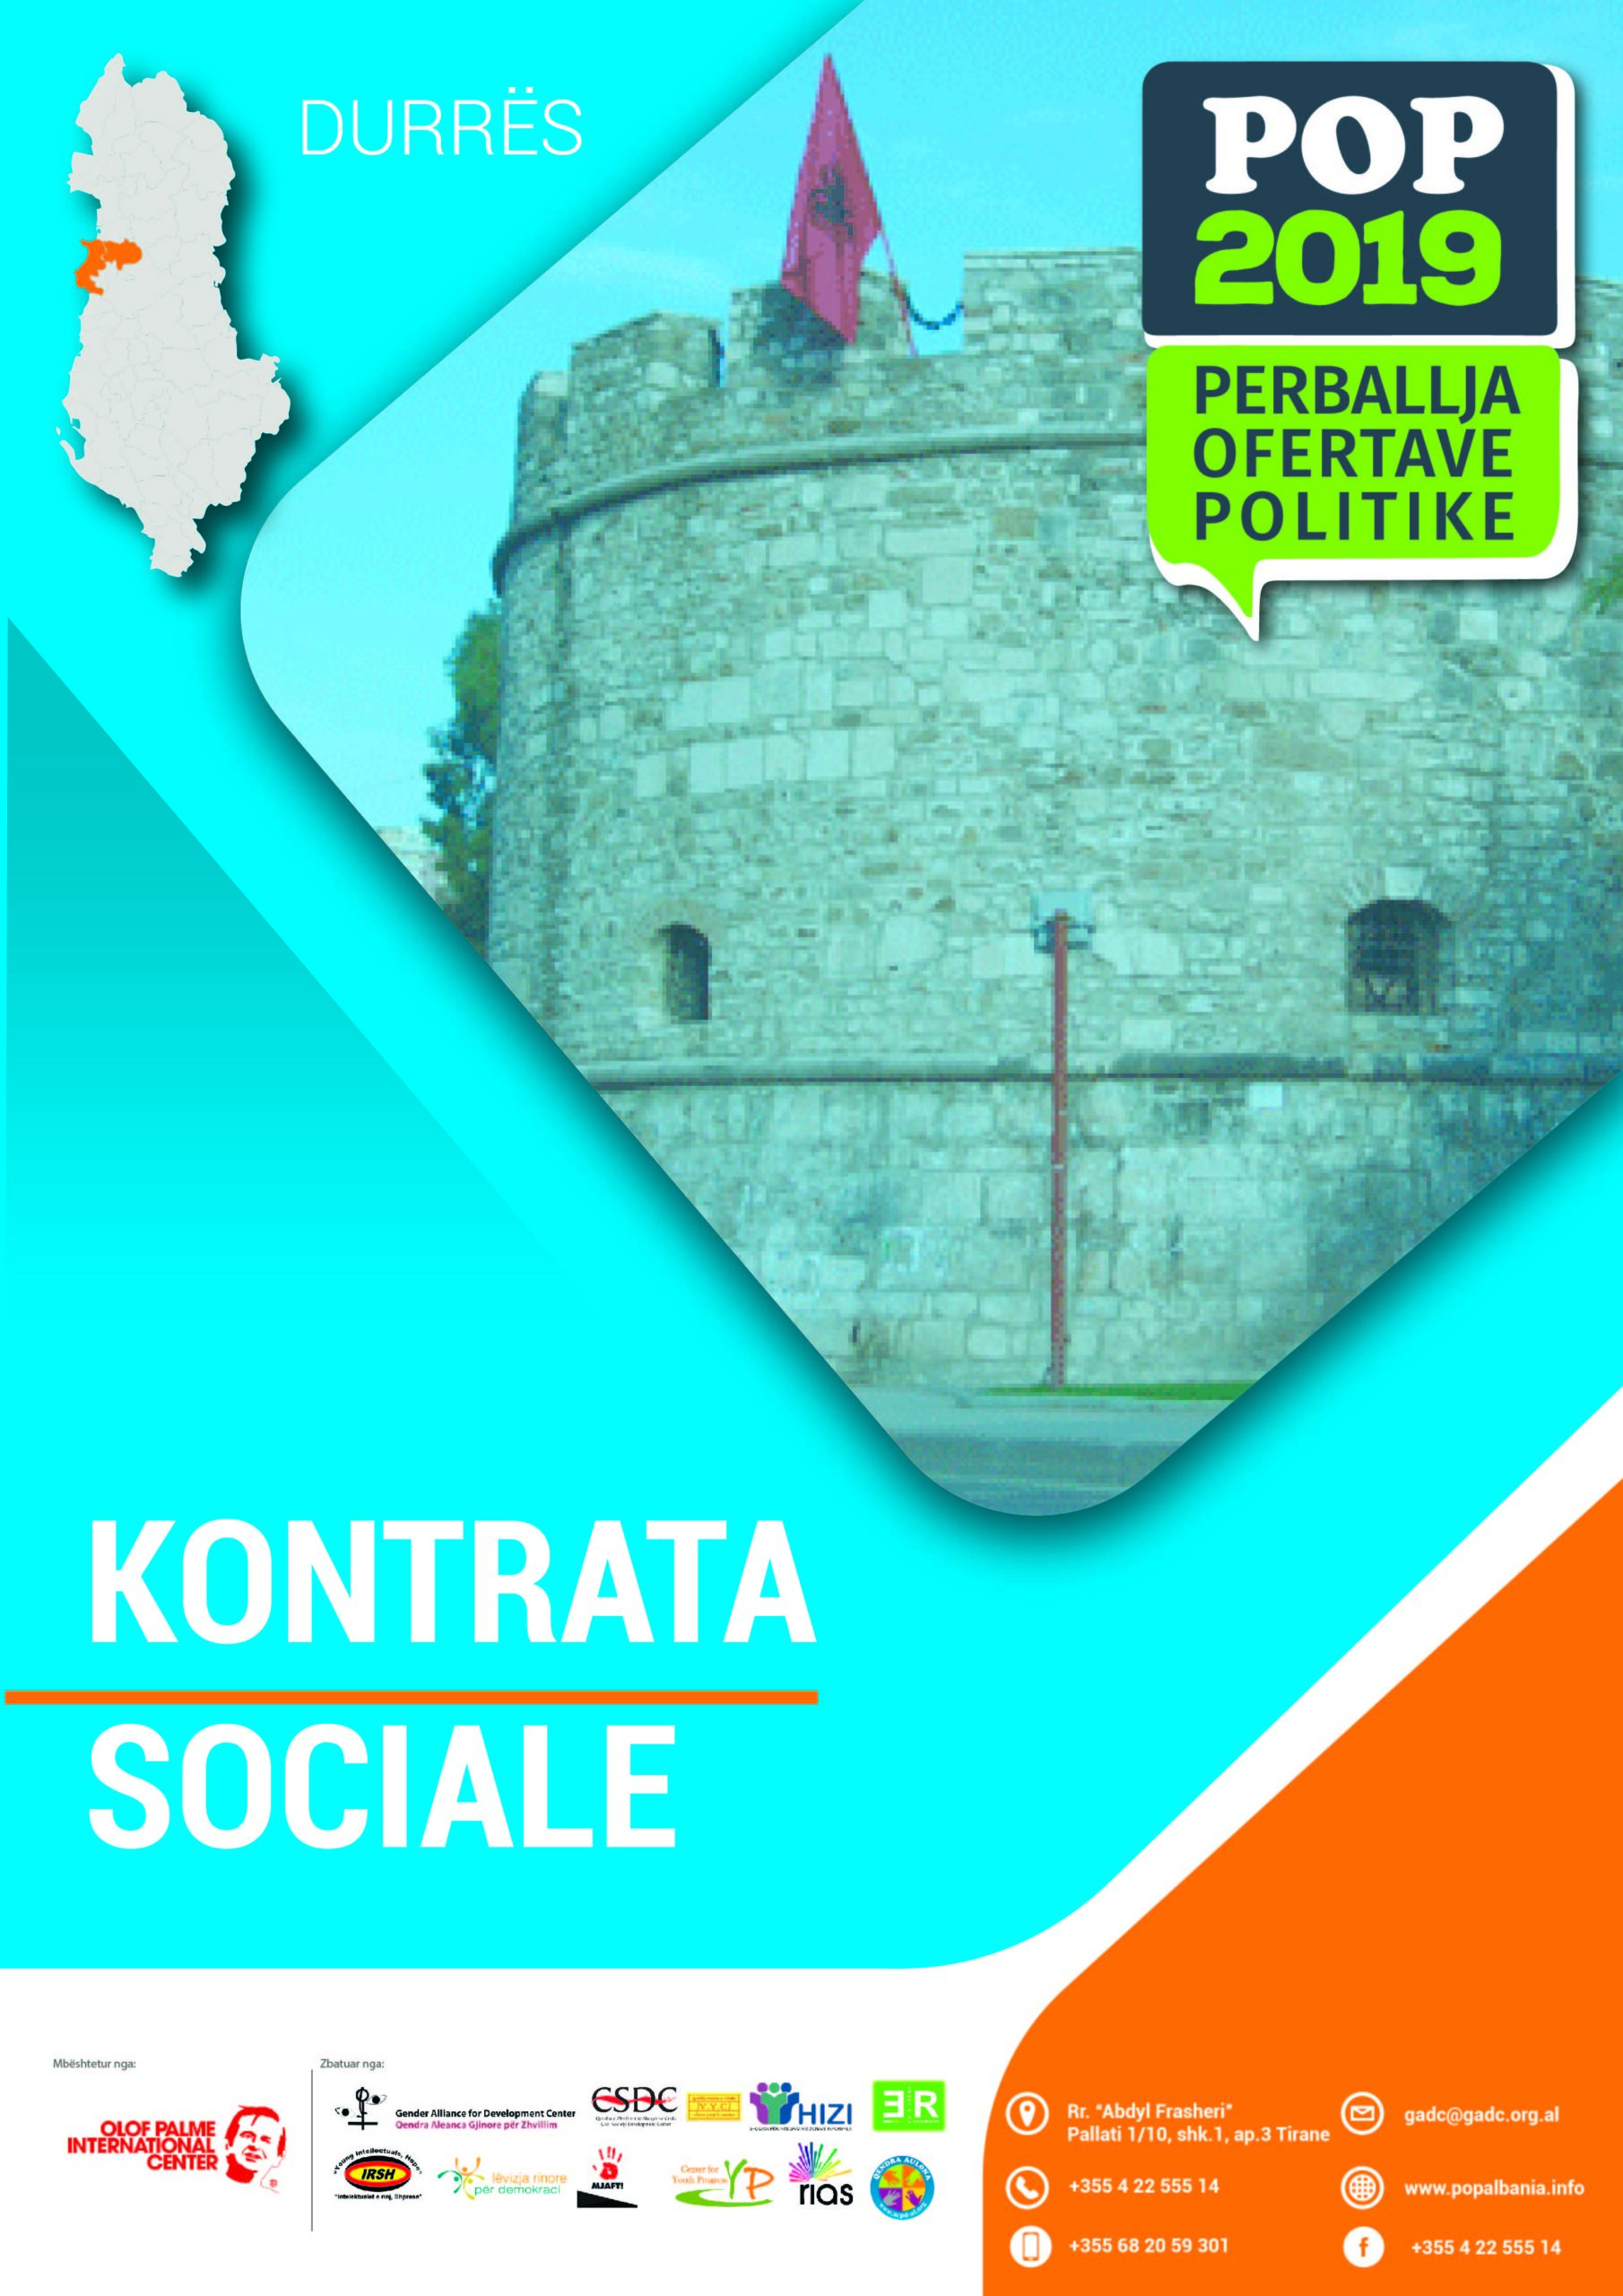 Kontrata Sociale me prioritetet kryesore Durrës